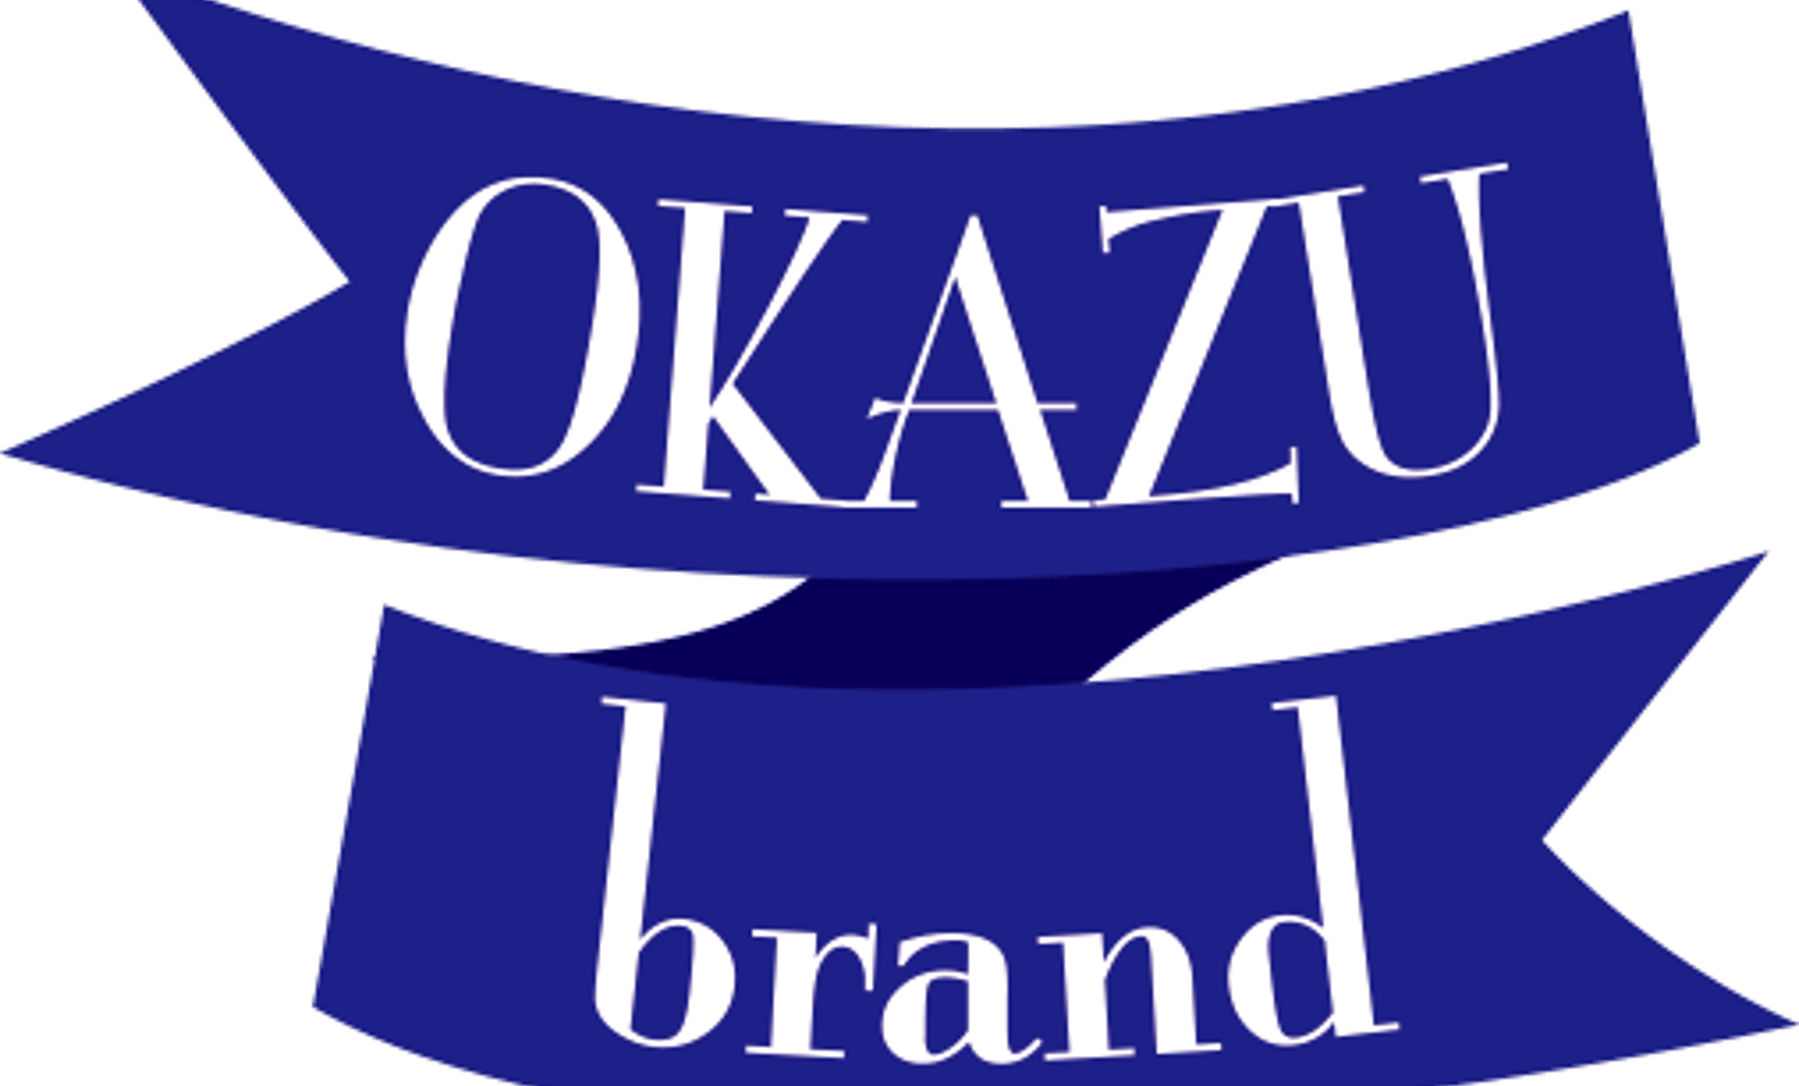 OKAZU brandのブース